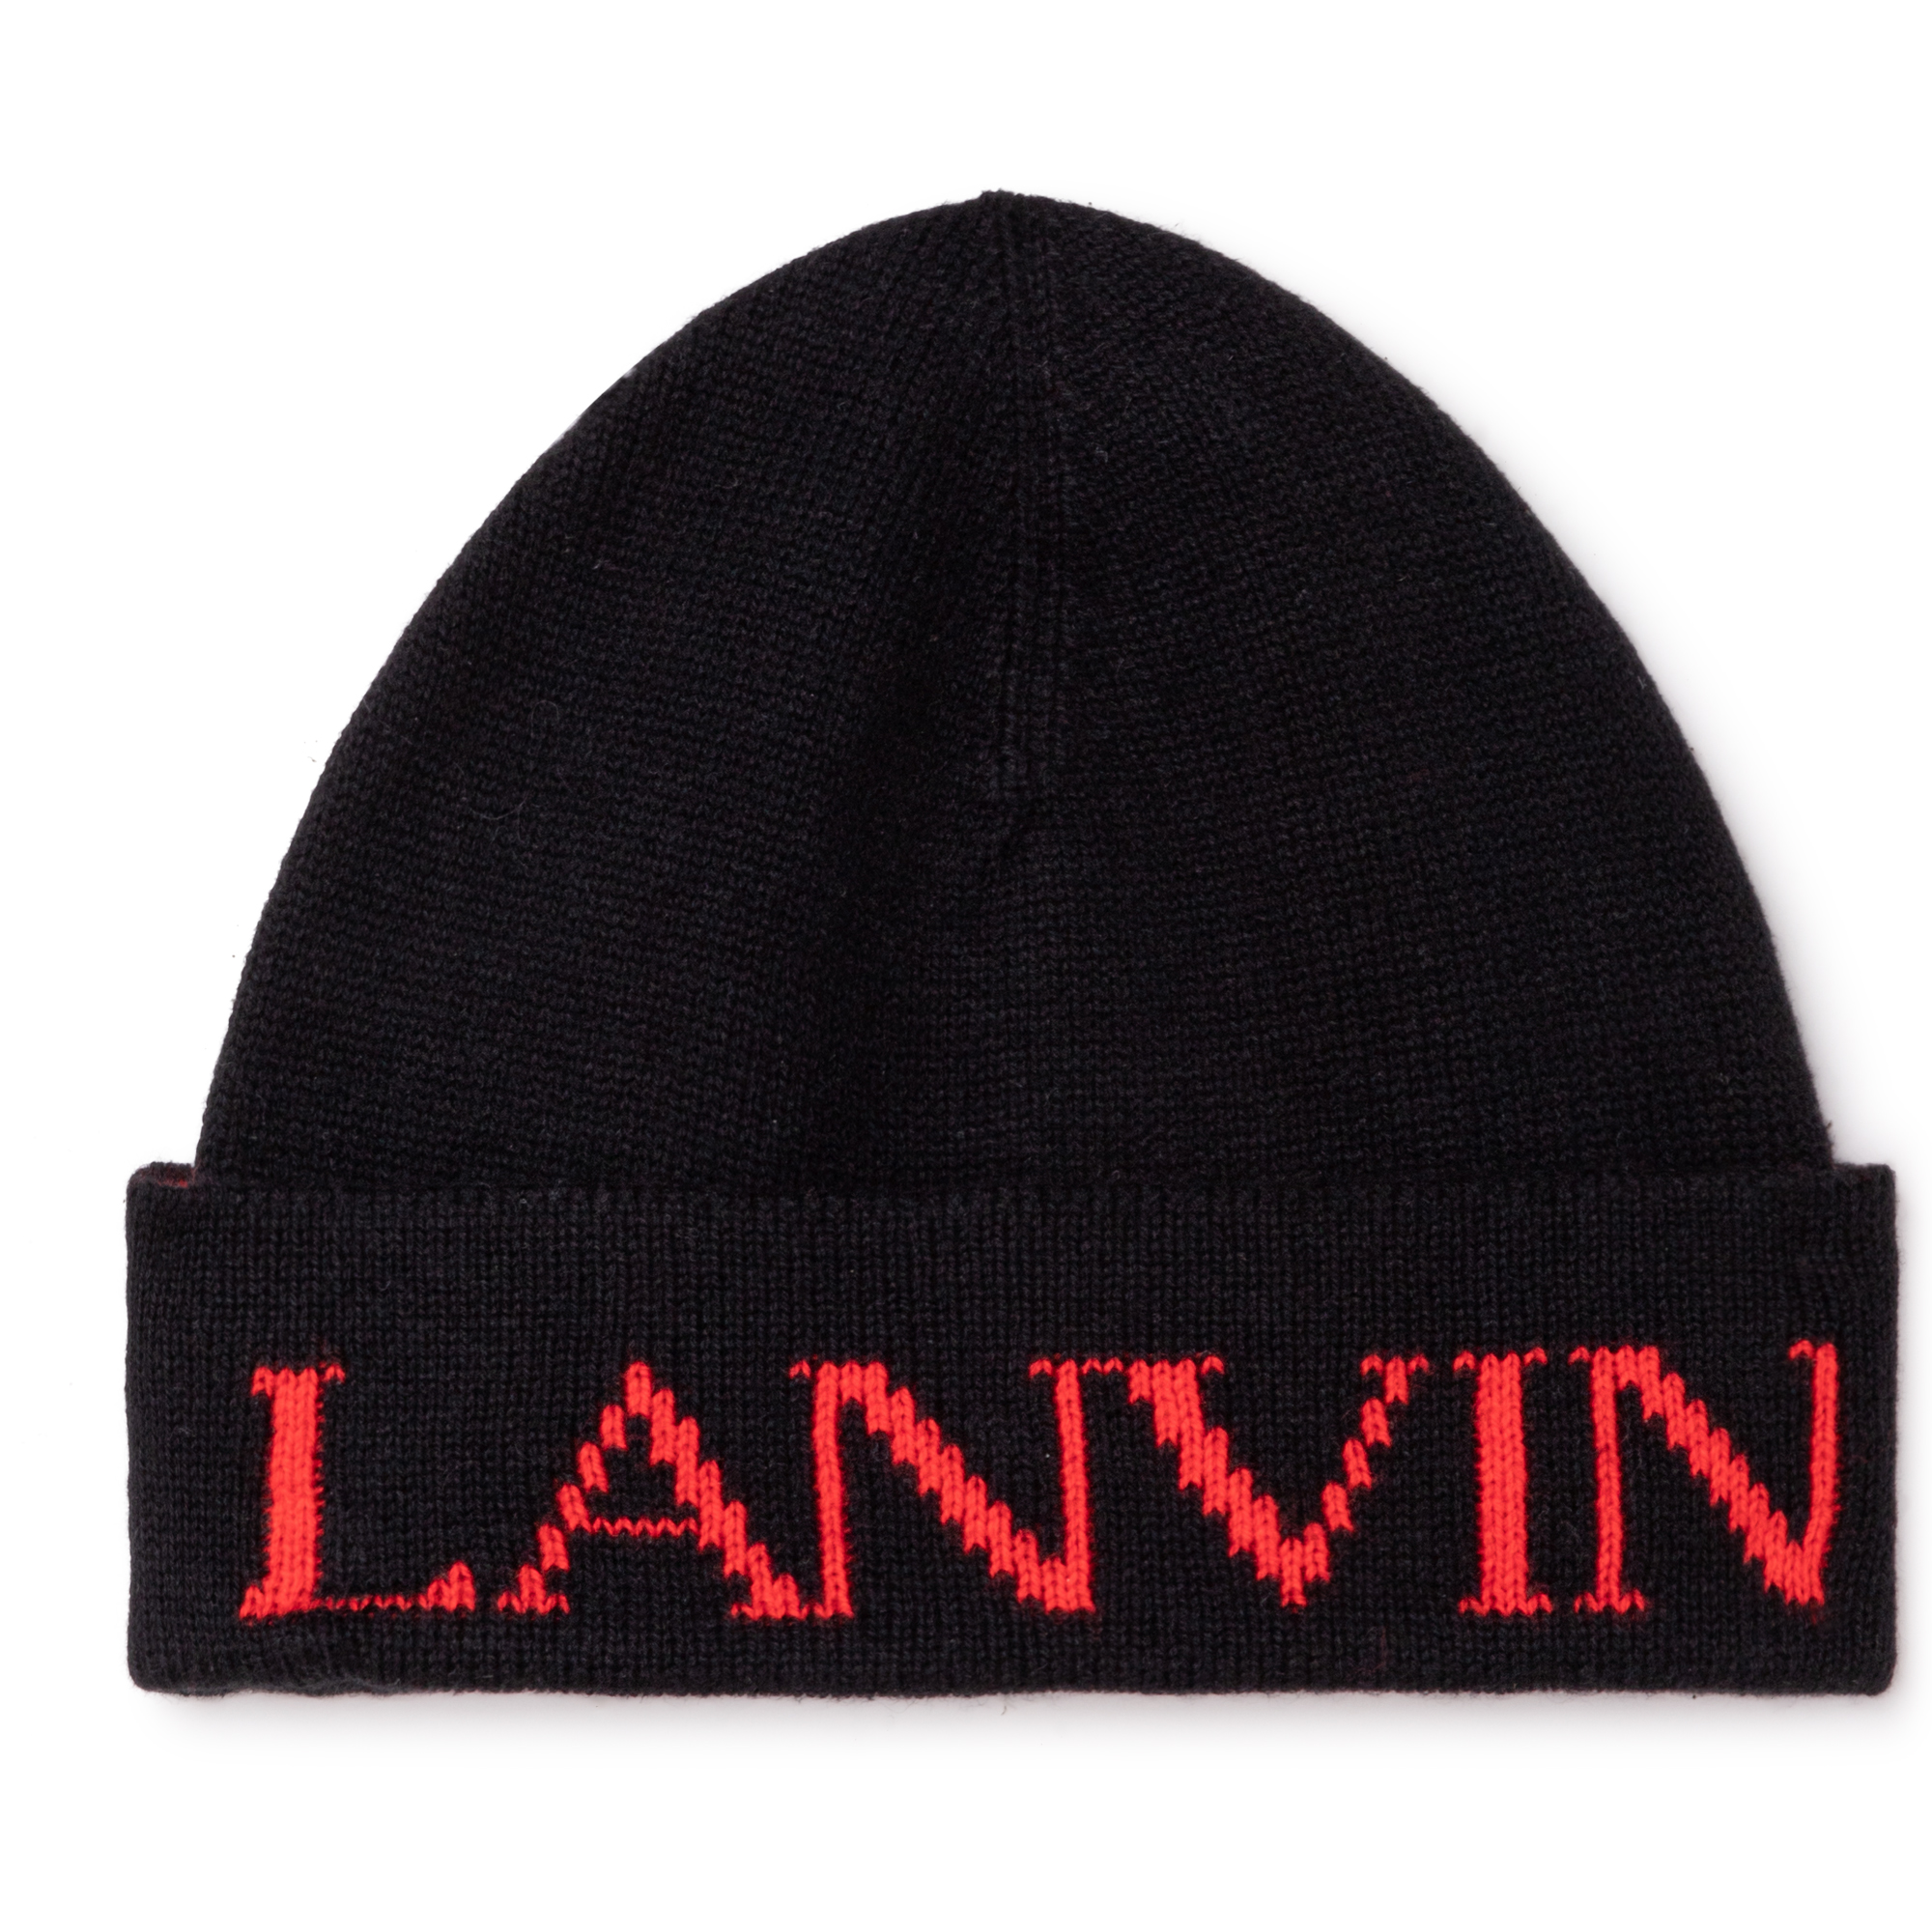 Tricot hat LANVIN for BOY